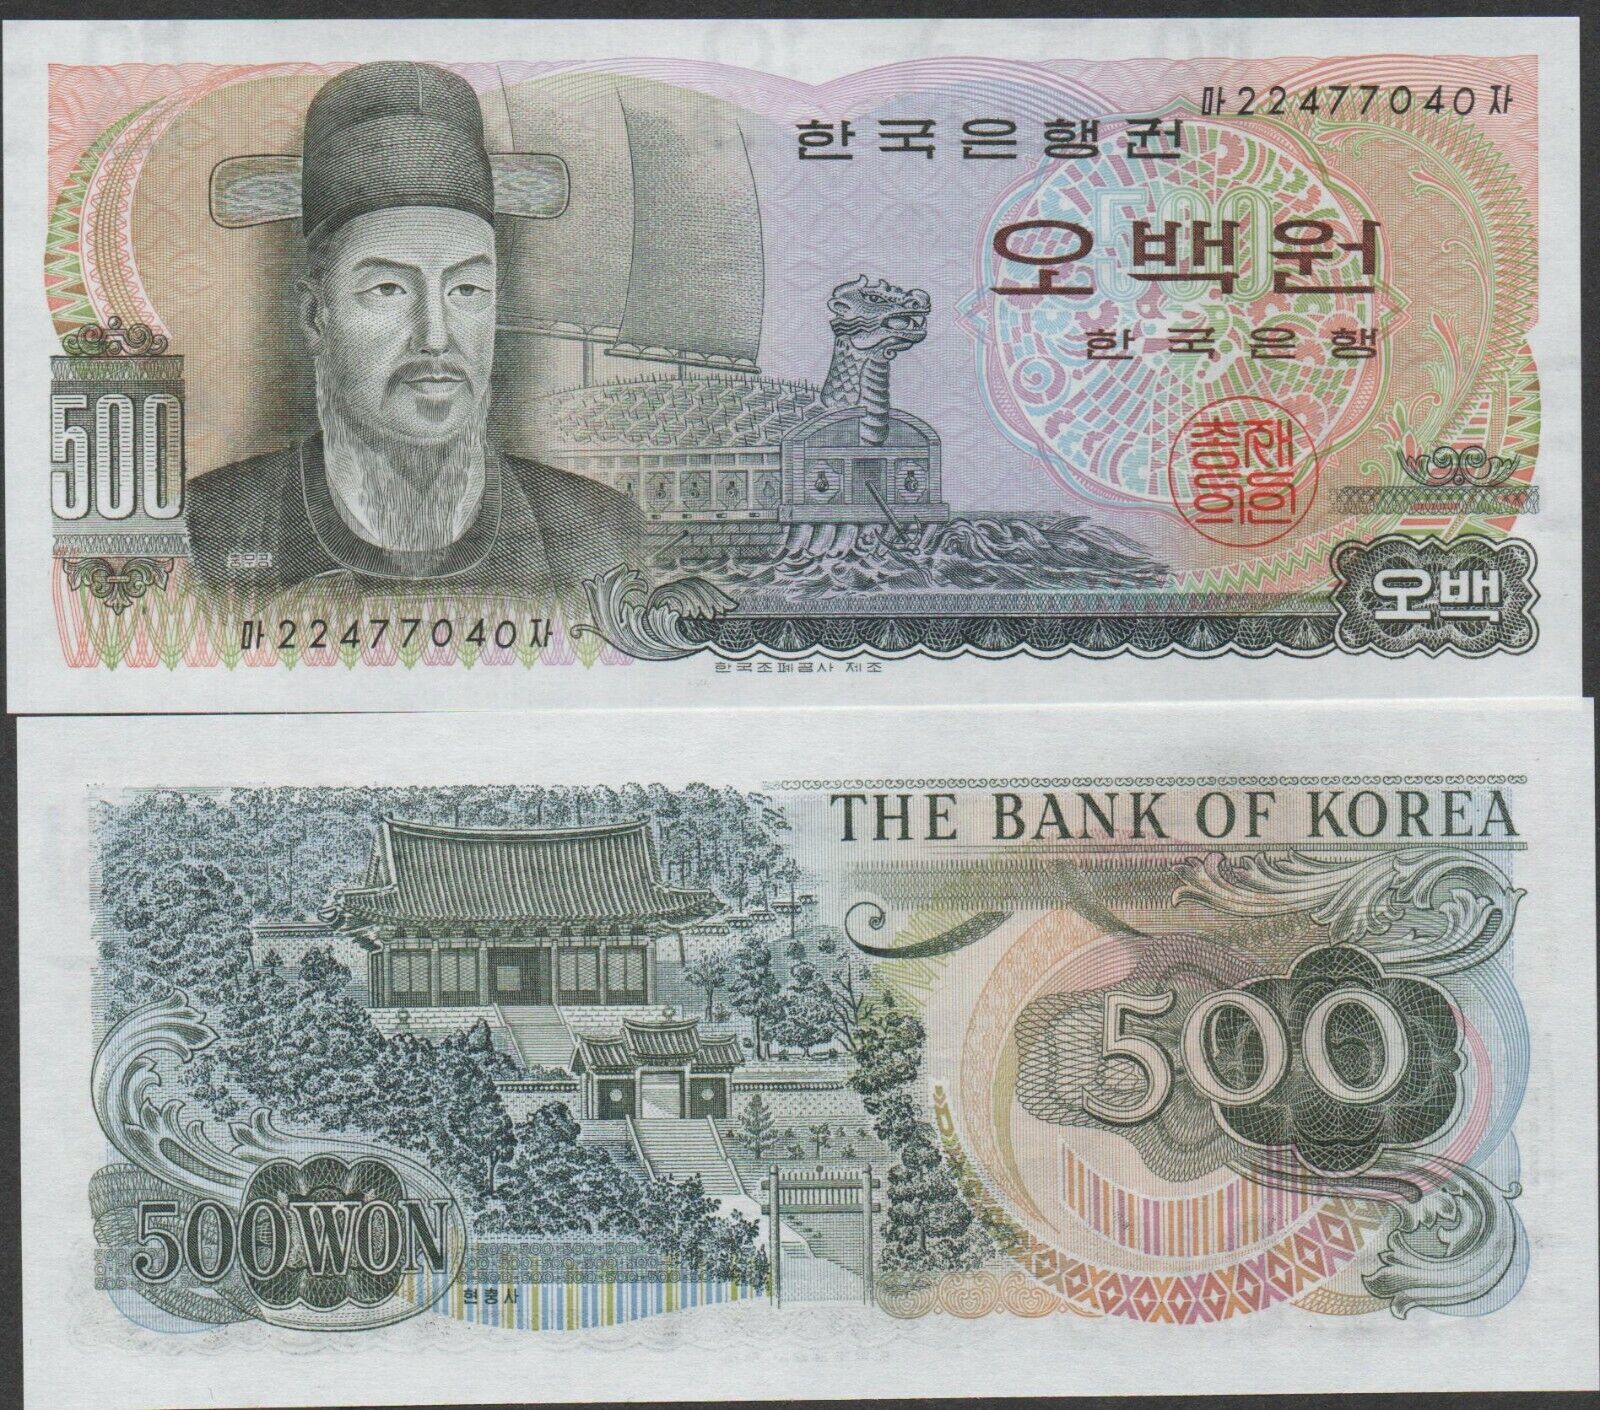 Korea  500  Won  Nd. 1973  P 43  Uncirculated Banknote R78